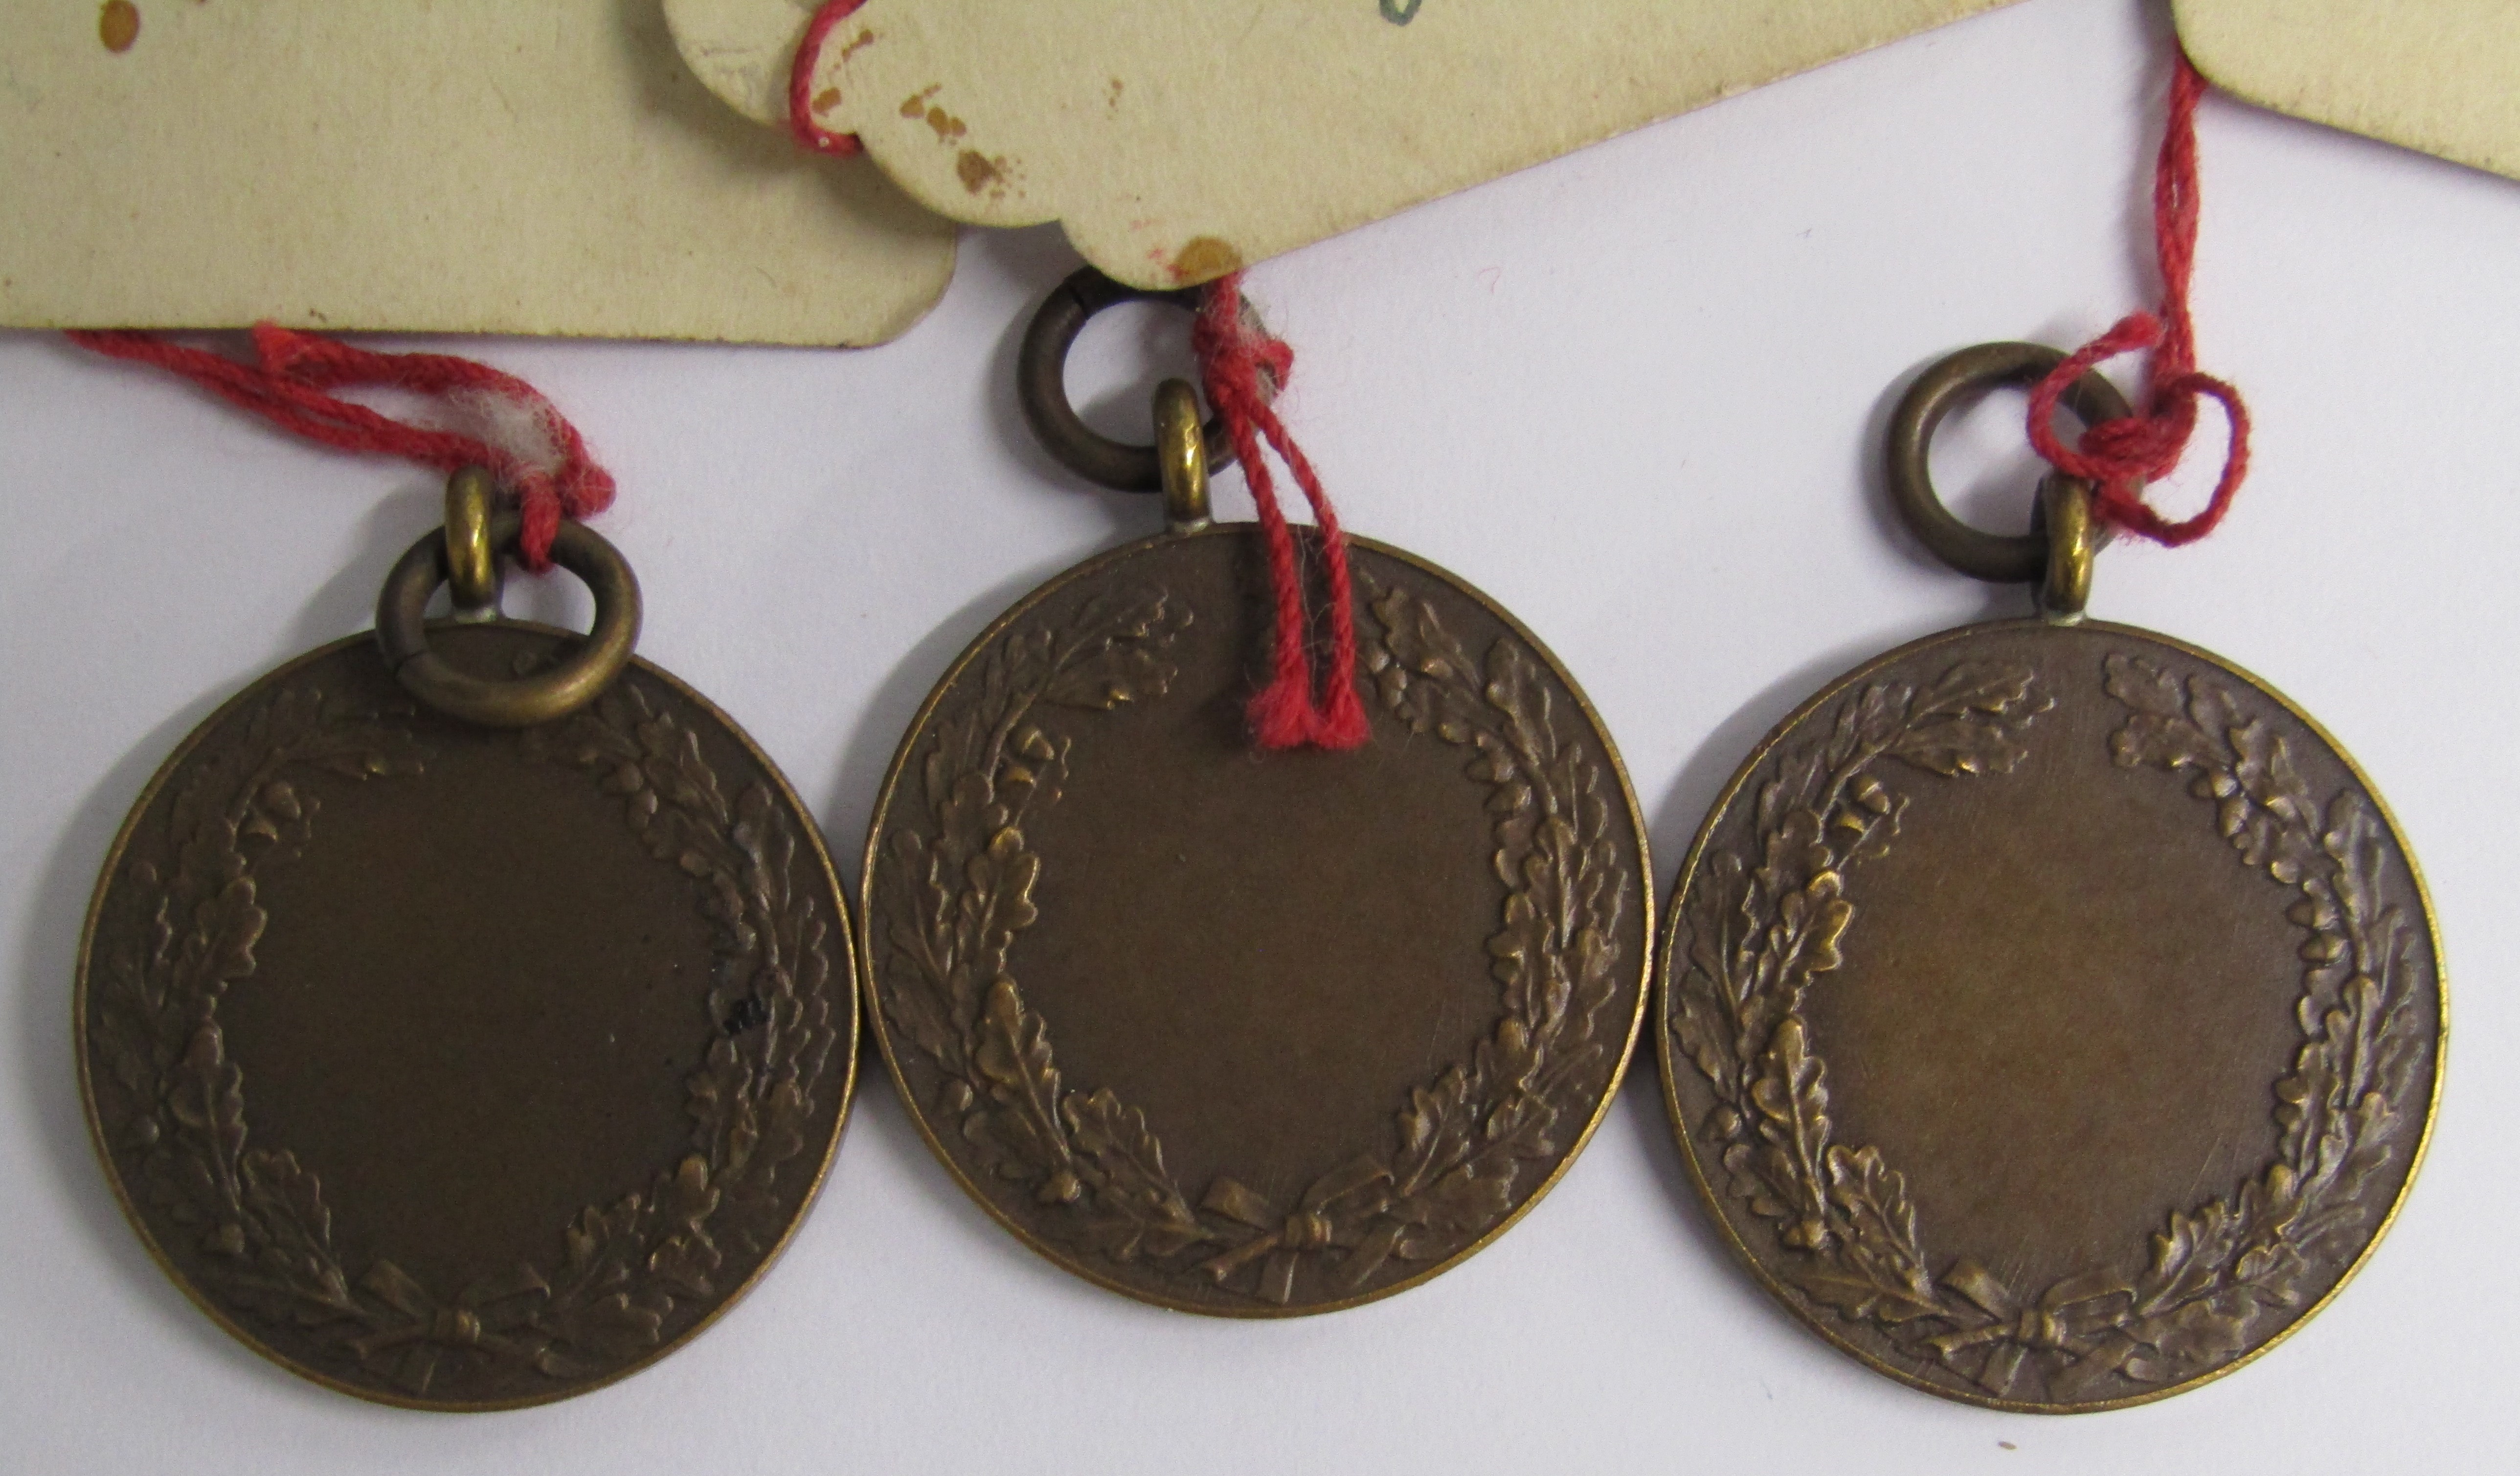 3 silver medallion pendants (0.59ozt) - 3 sports medallions, British Legion pin badge, Fattorini - Image 5 of 10